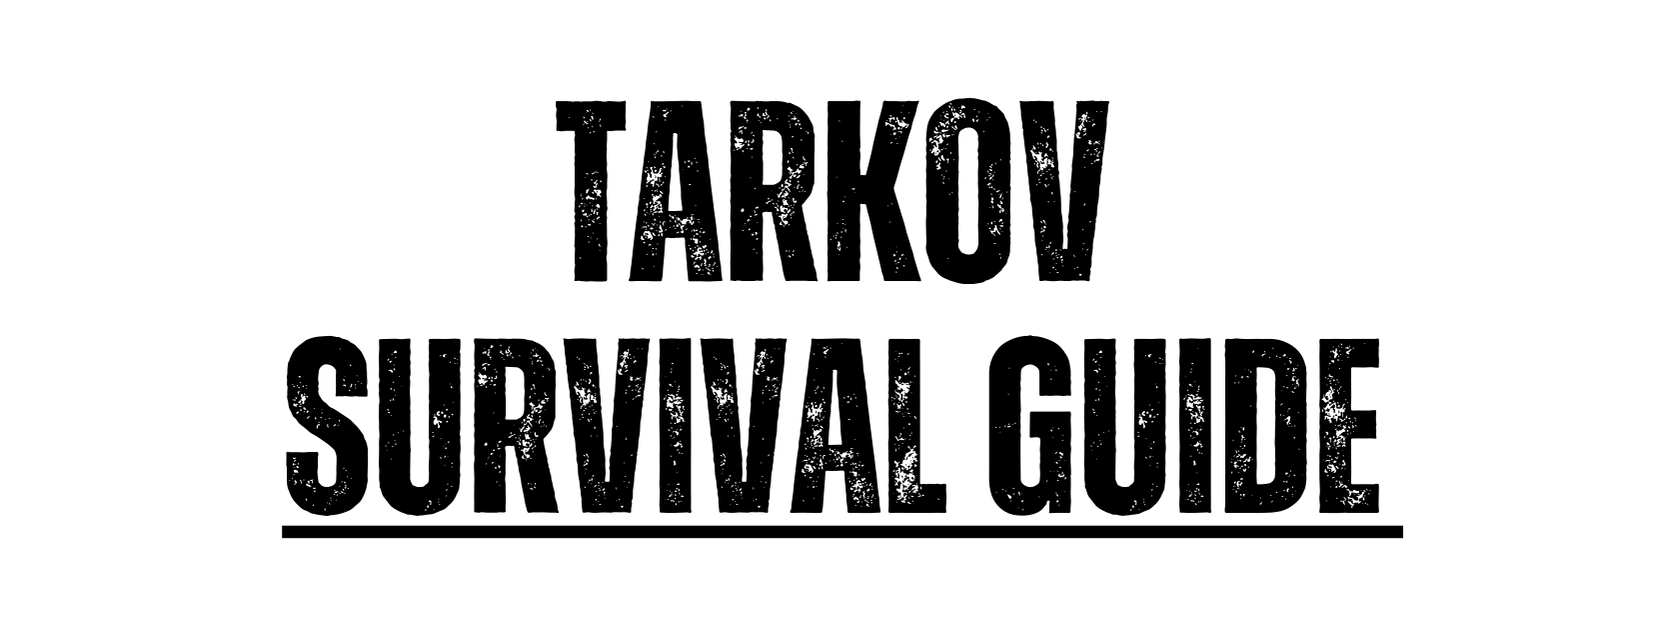 Tarkov Survival Guide